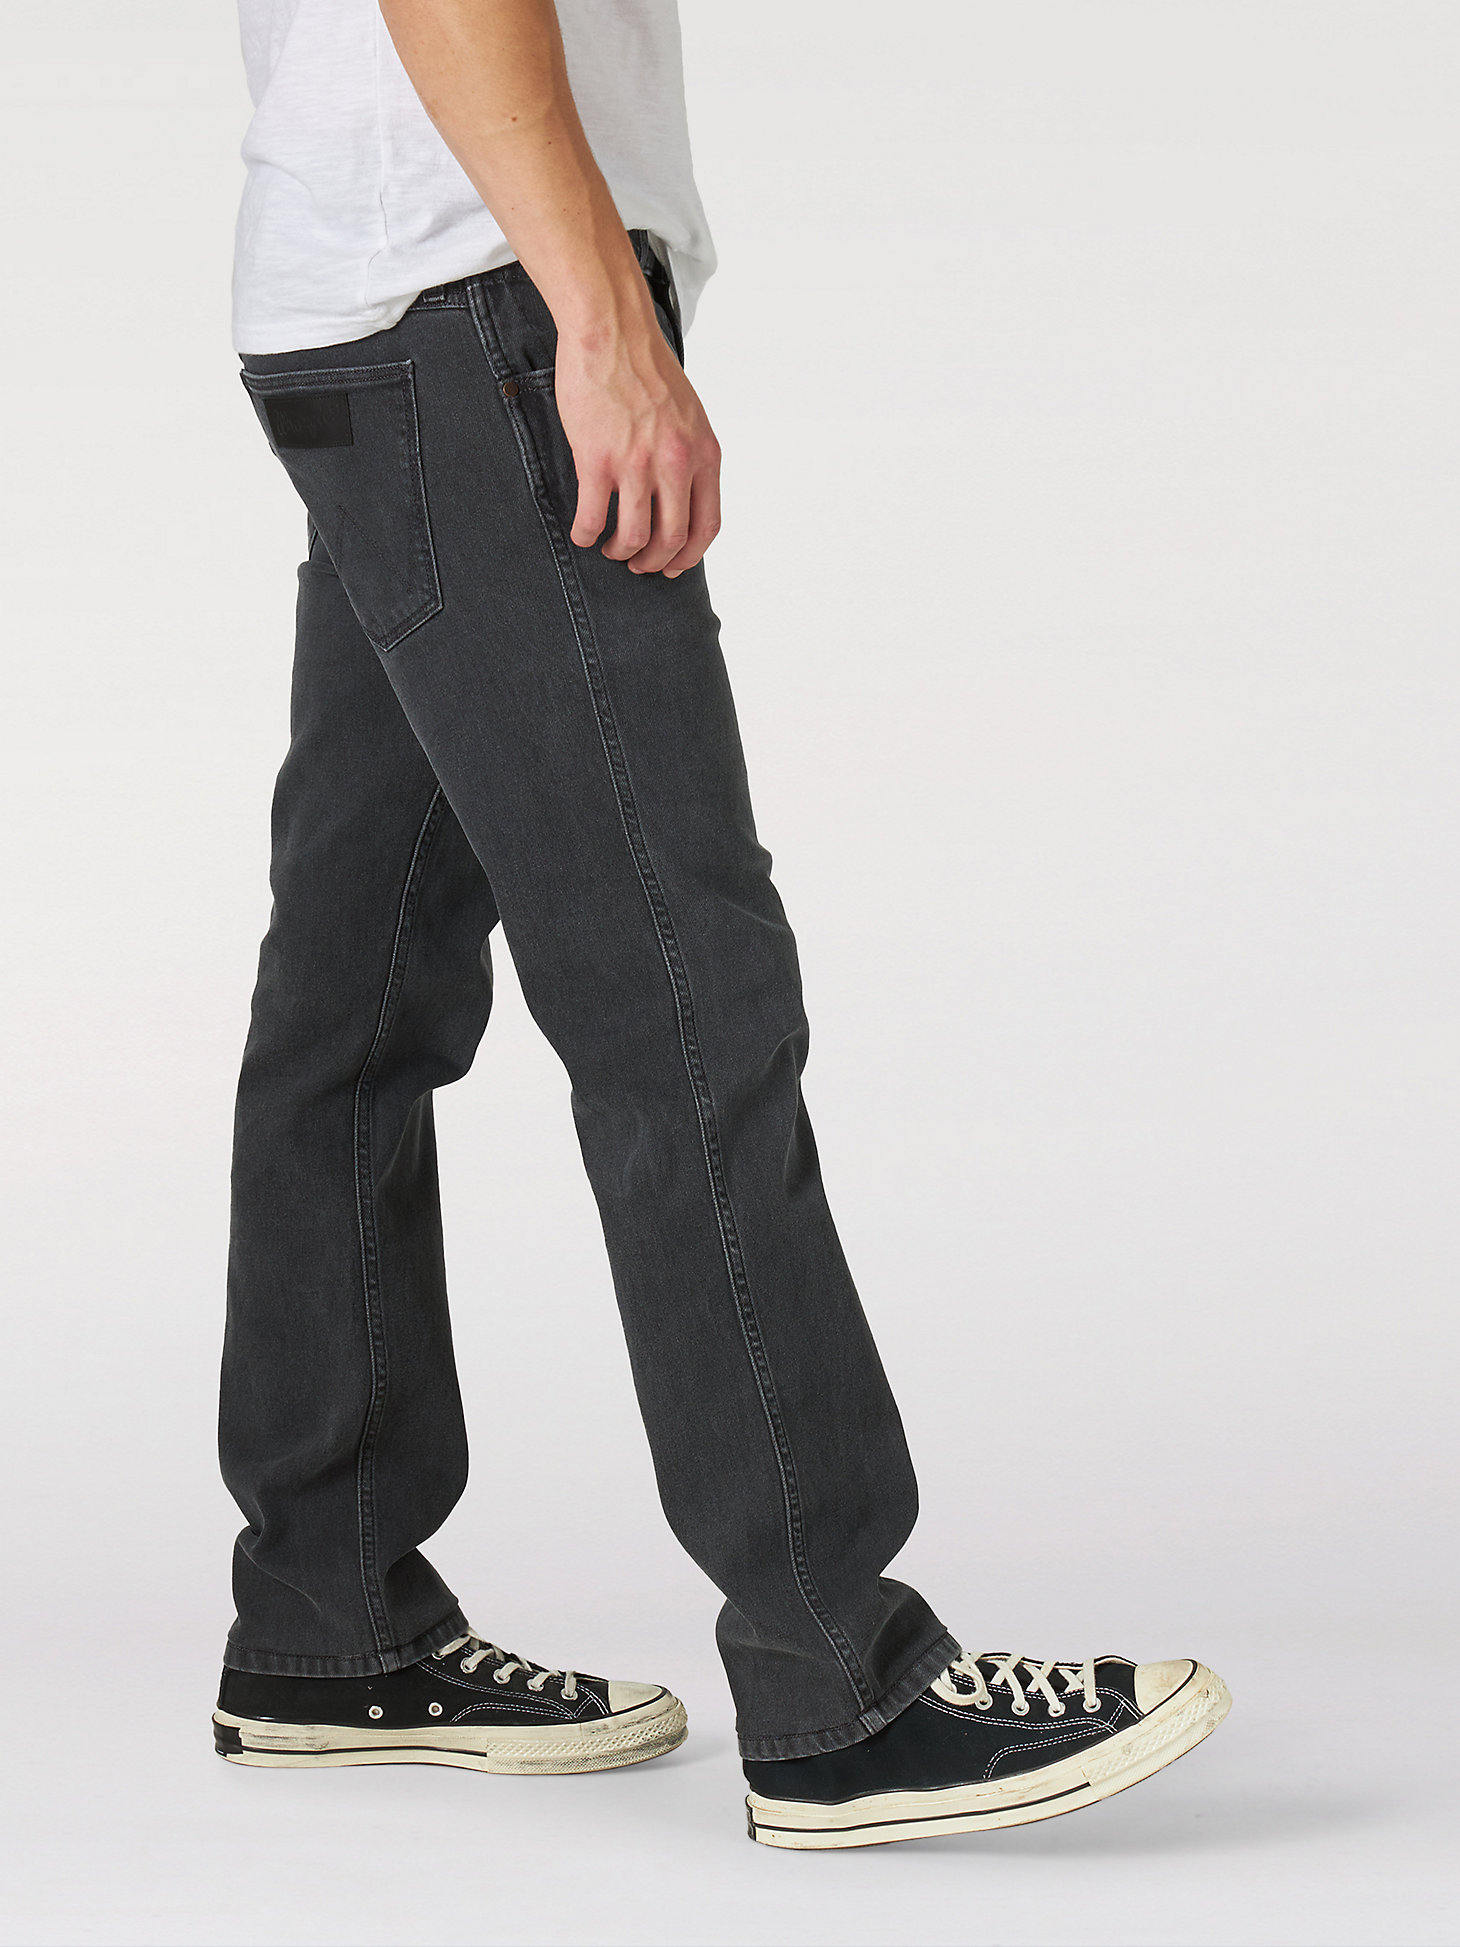 Men's Greensboro Straight Leg Jean in Black Gold alternative view 3